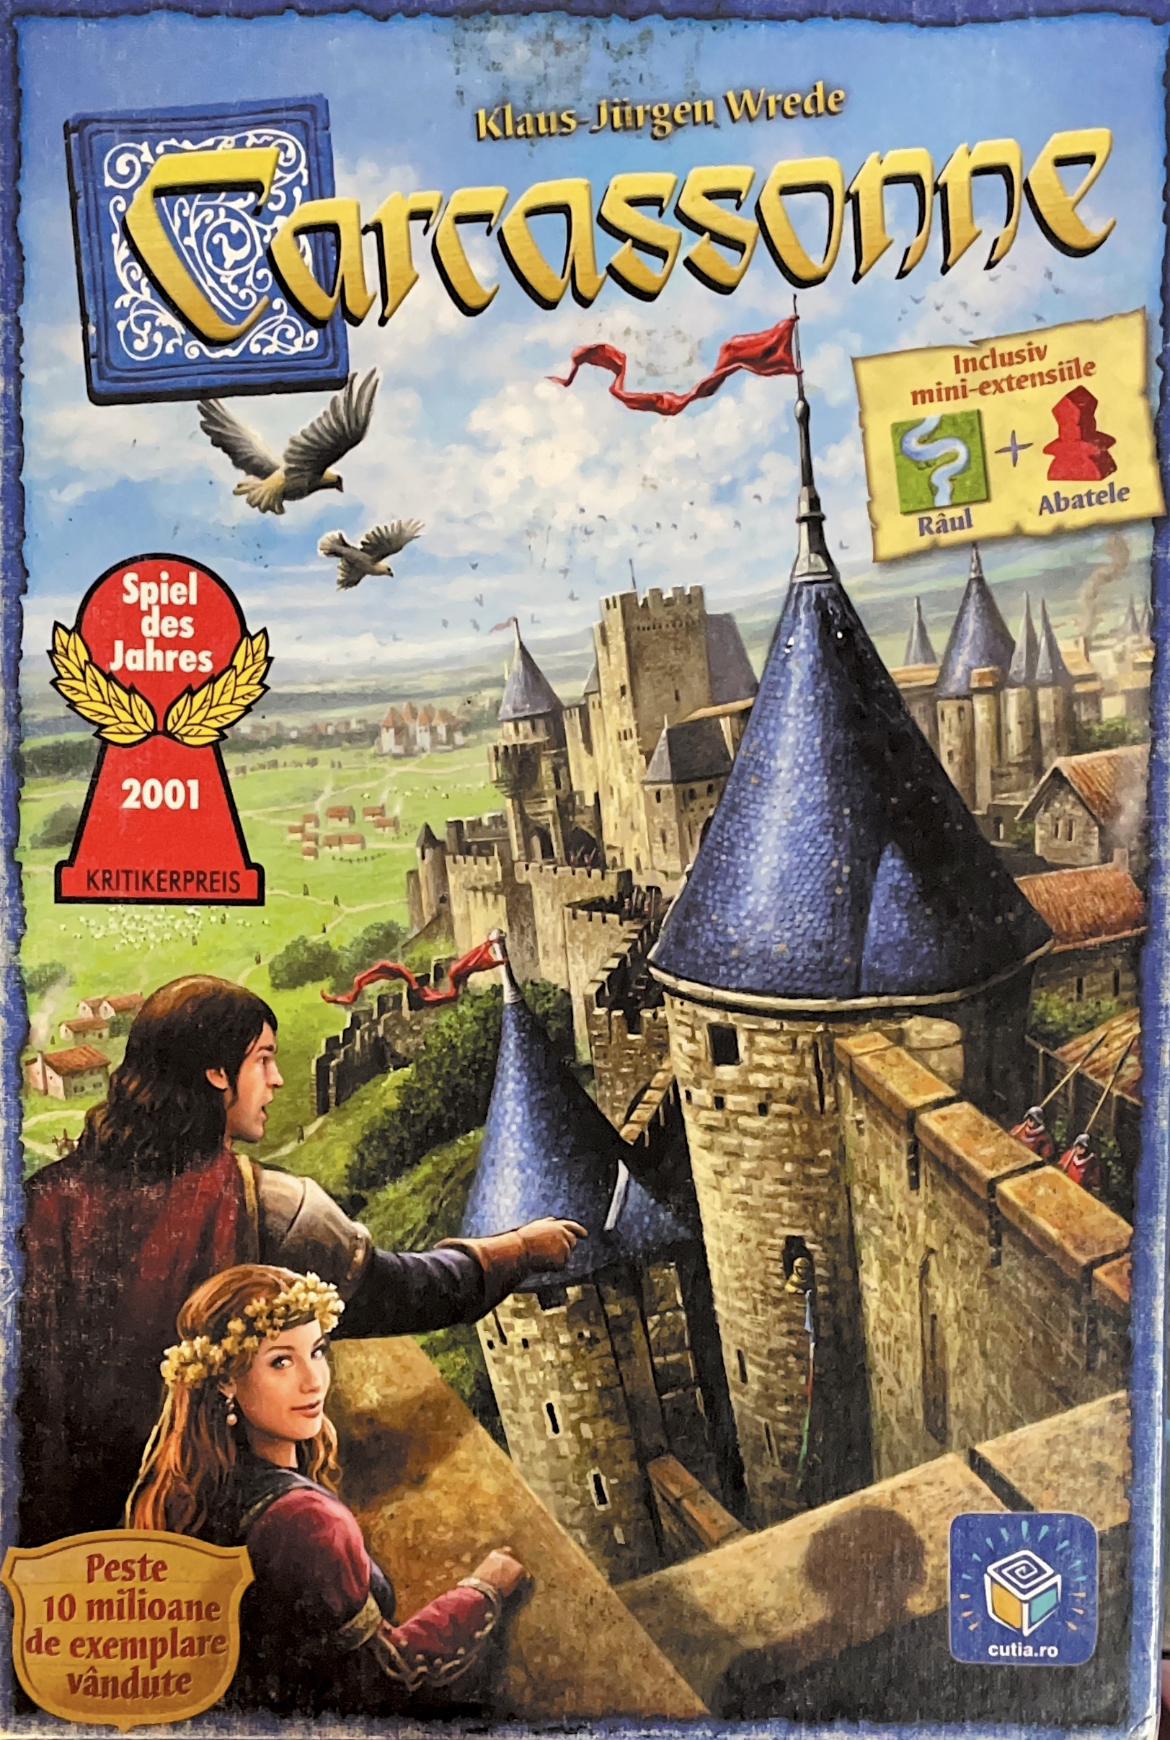 Board Games: Catan; Azul; Activity; Carcassonne și multe altele. Carcassonne